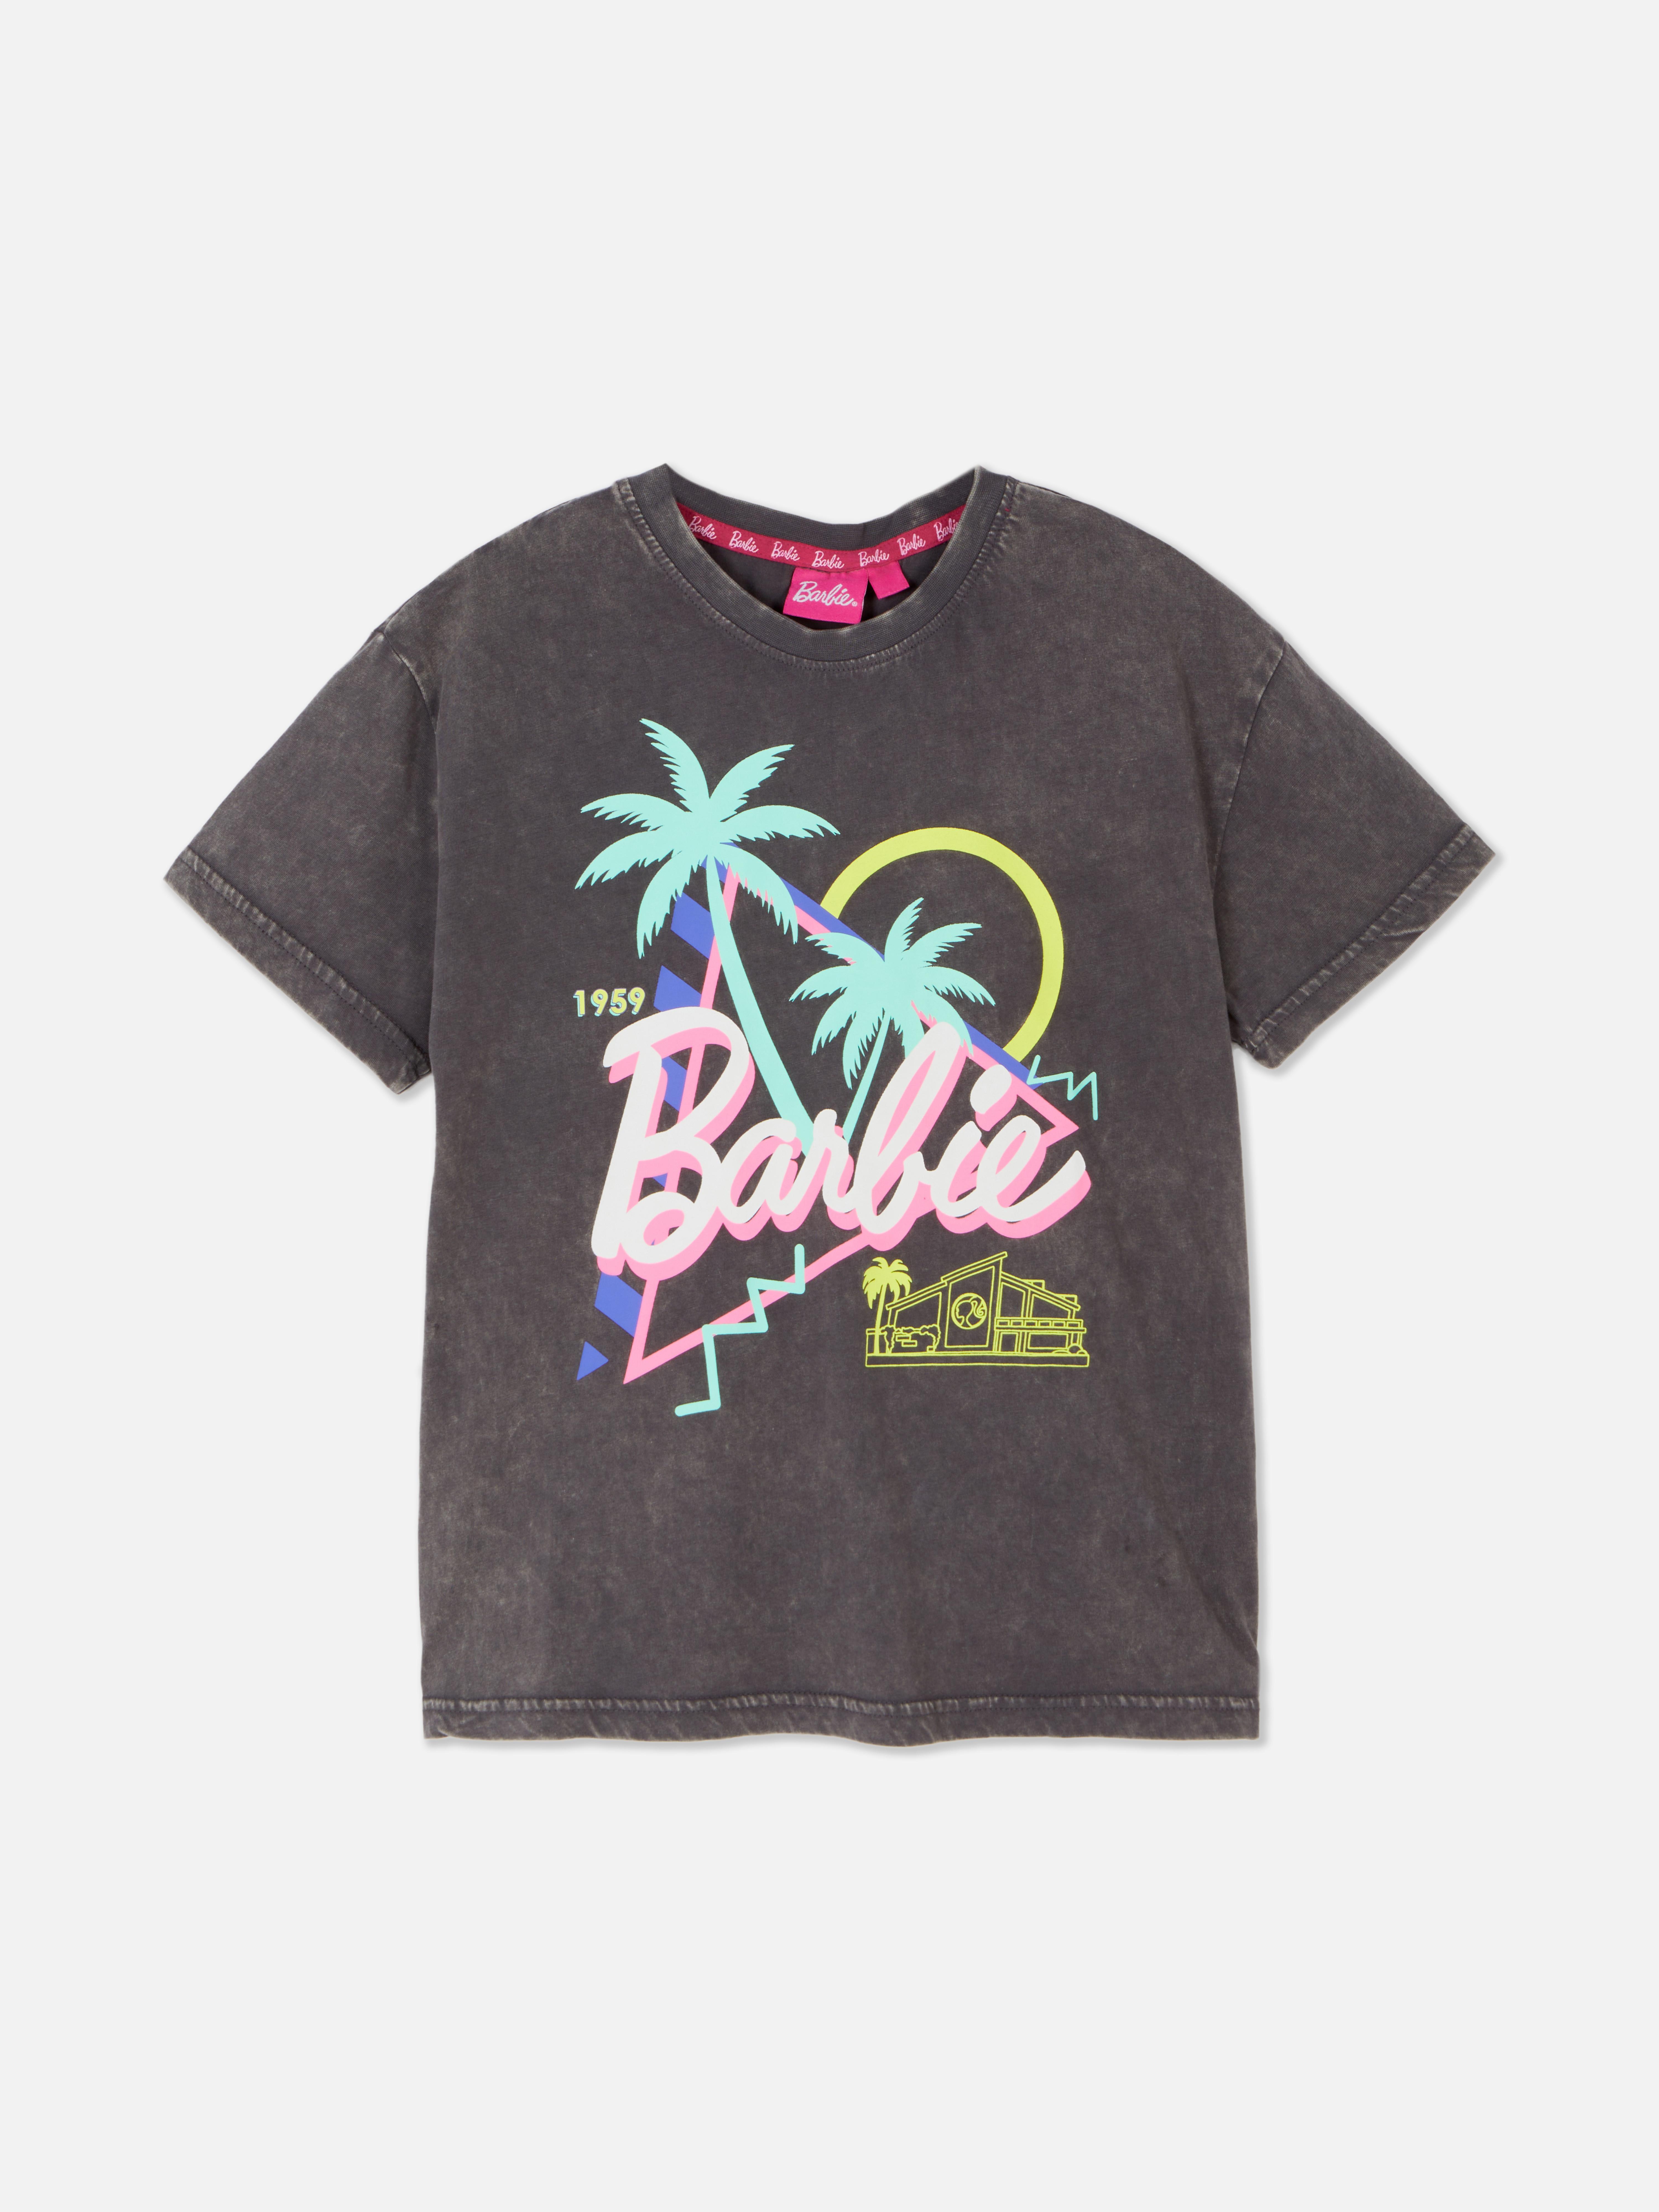 Barbie Graphic T-Shirt